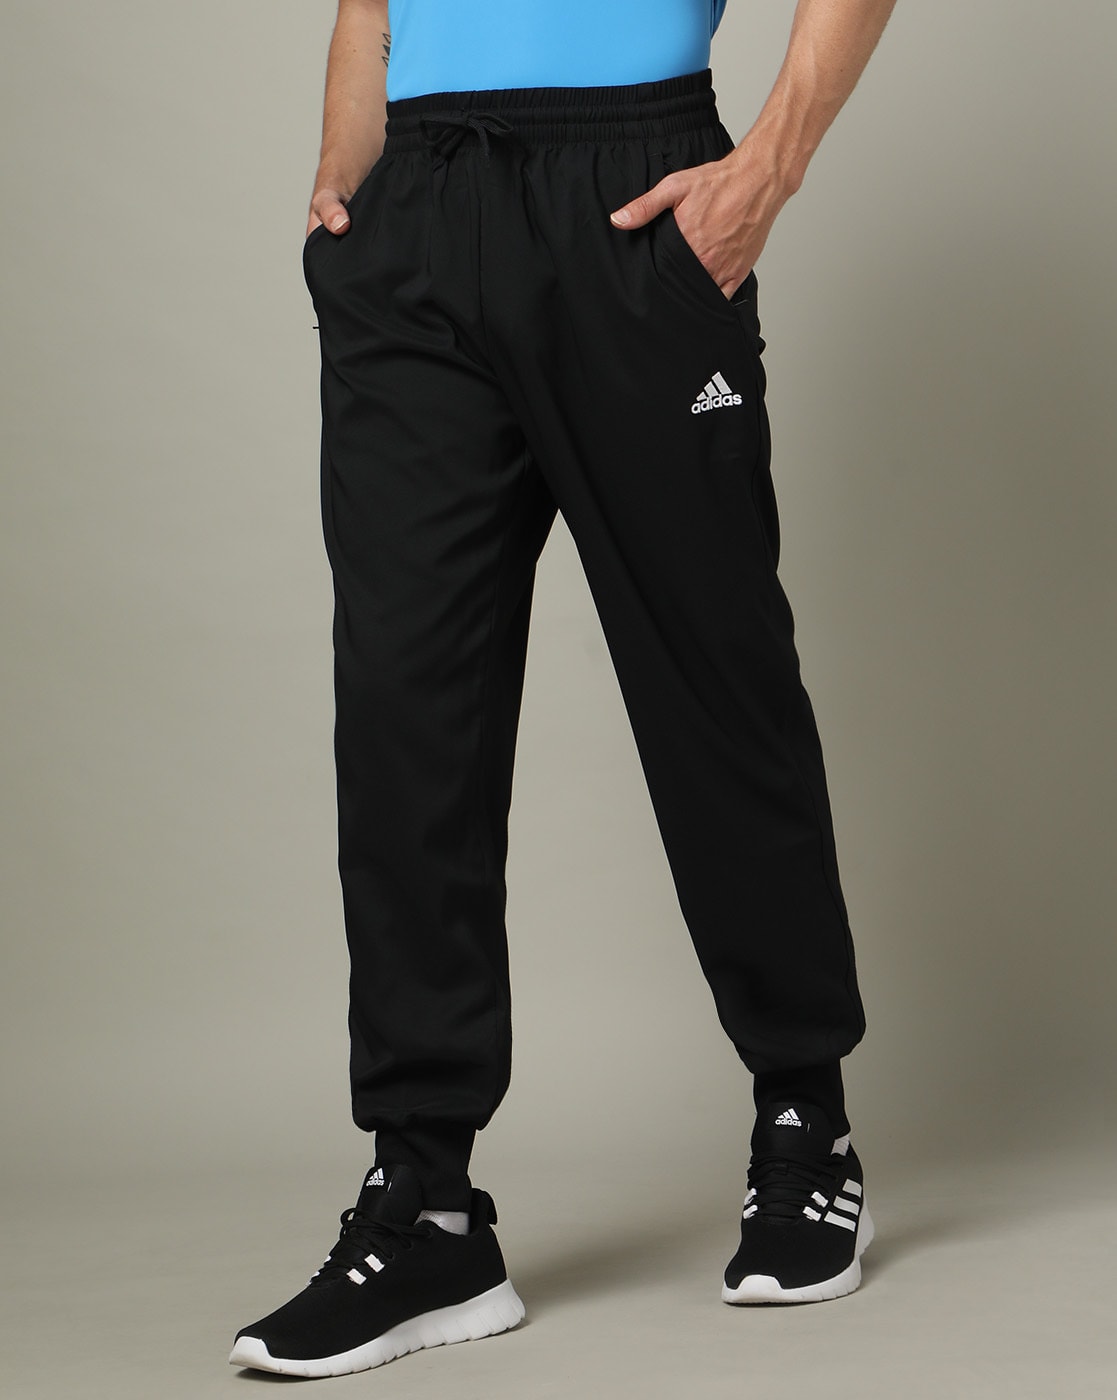 Adidas Men Regular Fit Joggers For Men (Black, S)